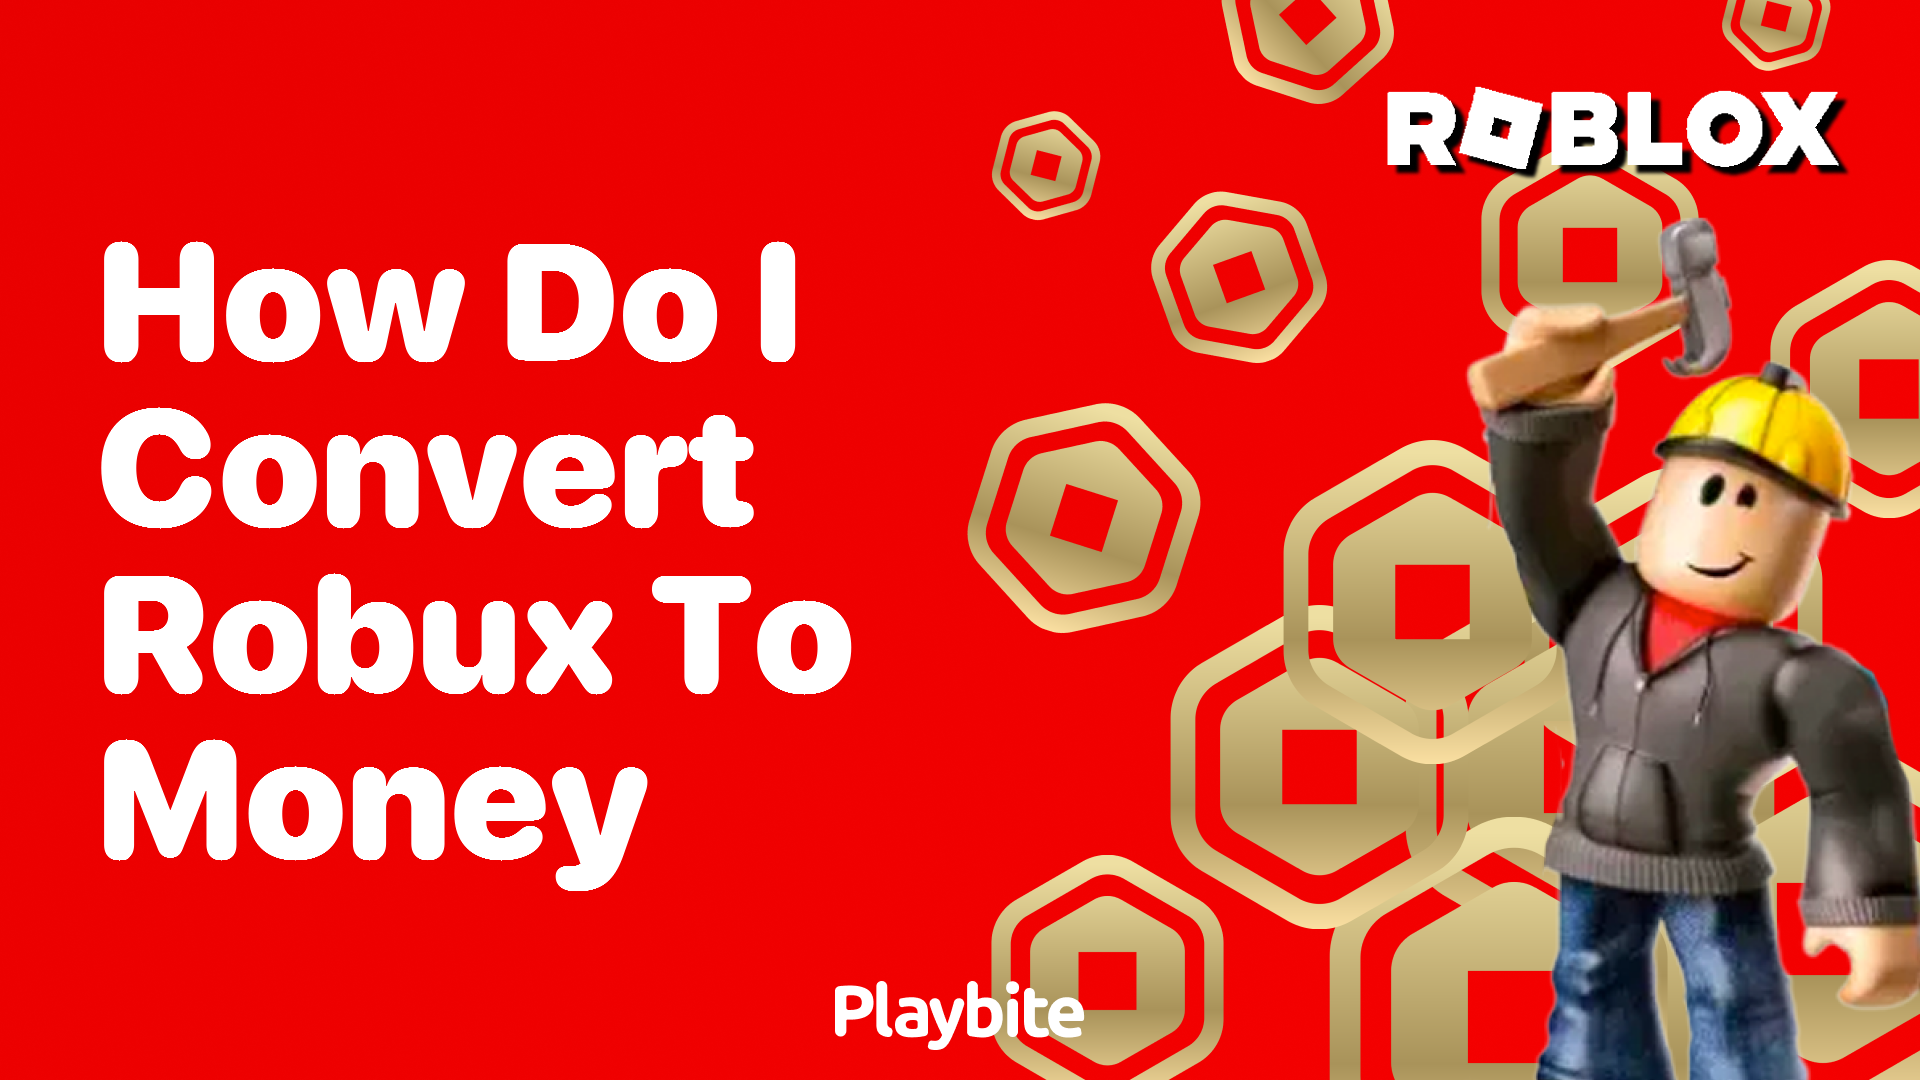 How Do I Convert Robux to Money?